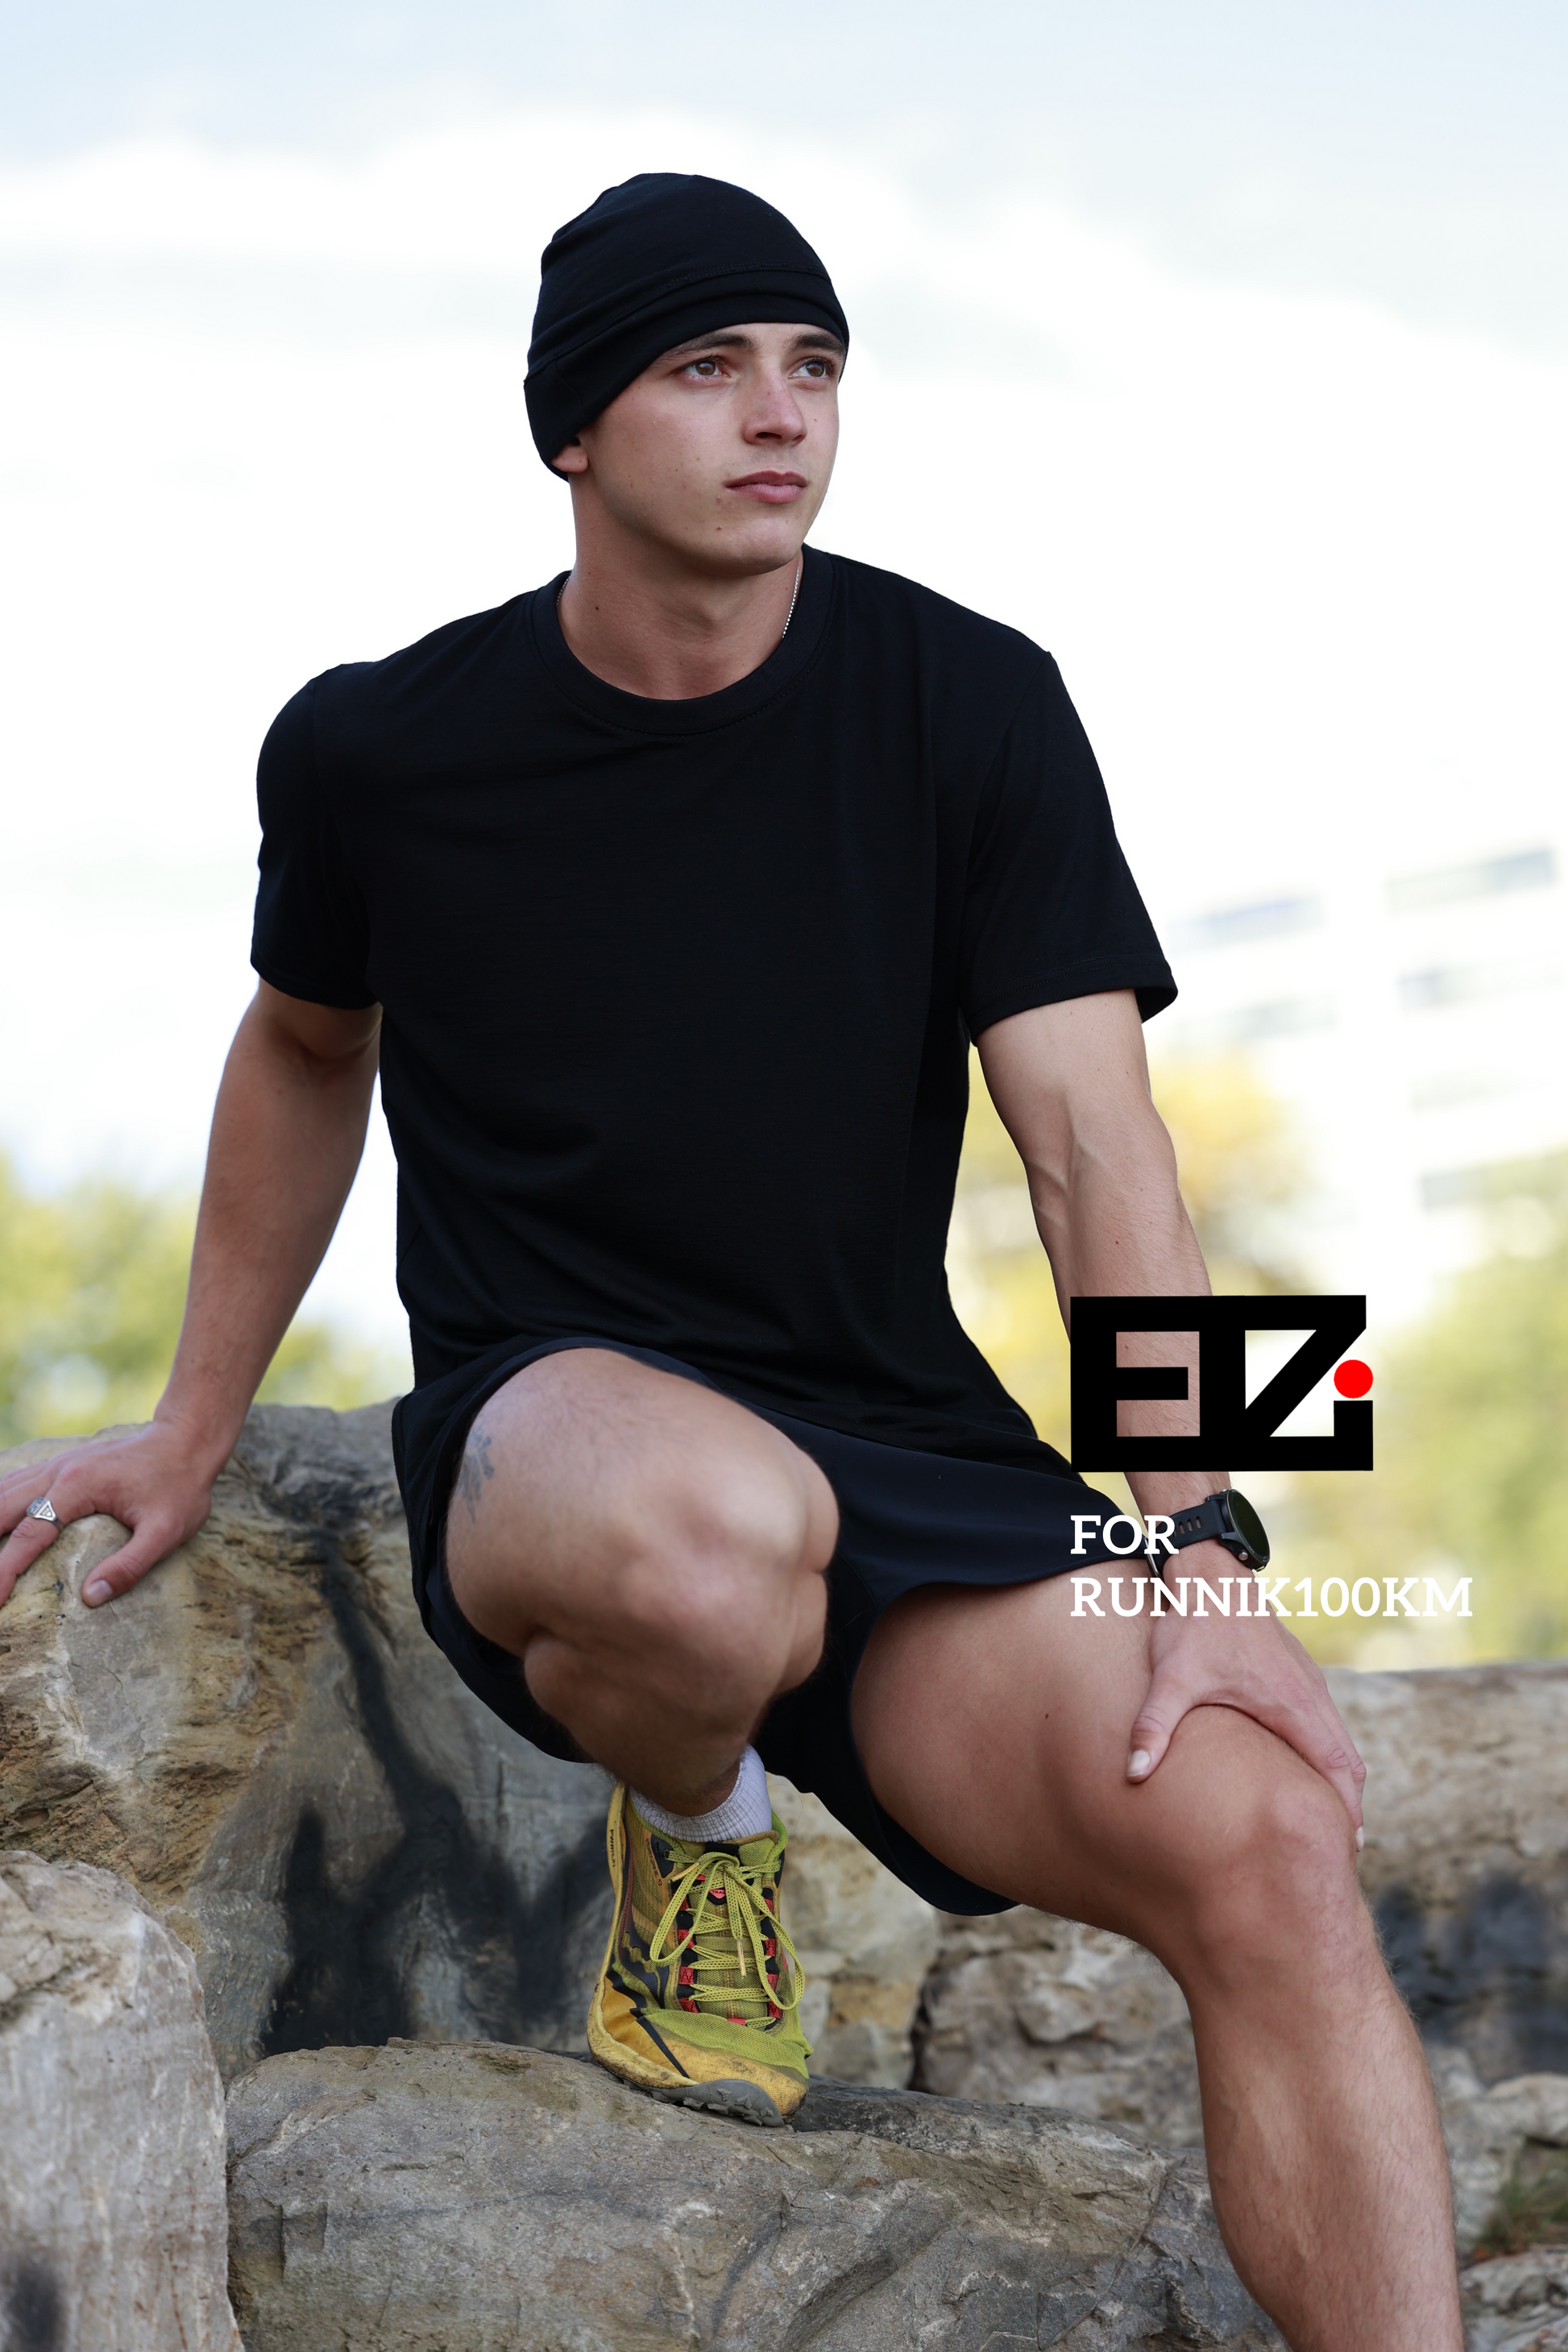 Model : Nikola Golymbiosky @runnik100km wears an ELZI T-Shirt and ELZI Beanie. Photographer : Jonathan Brunelle